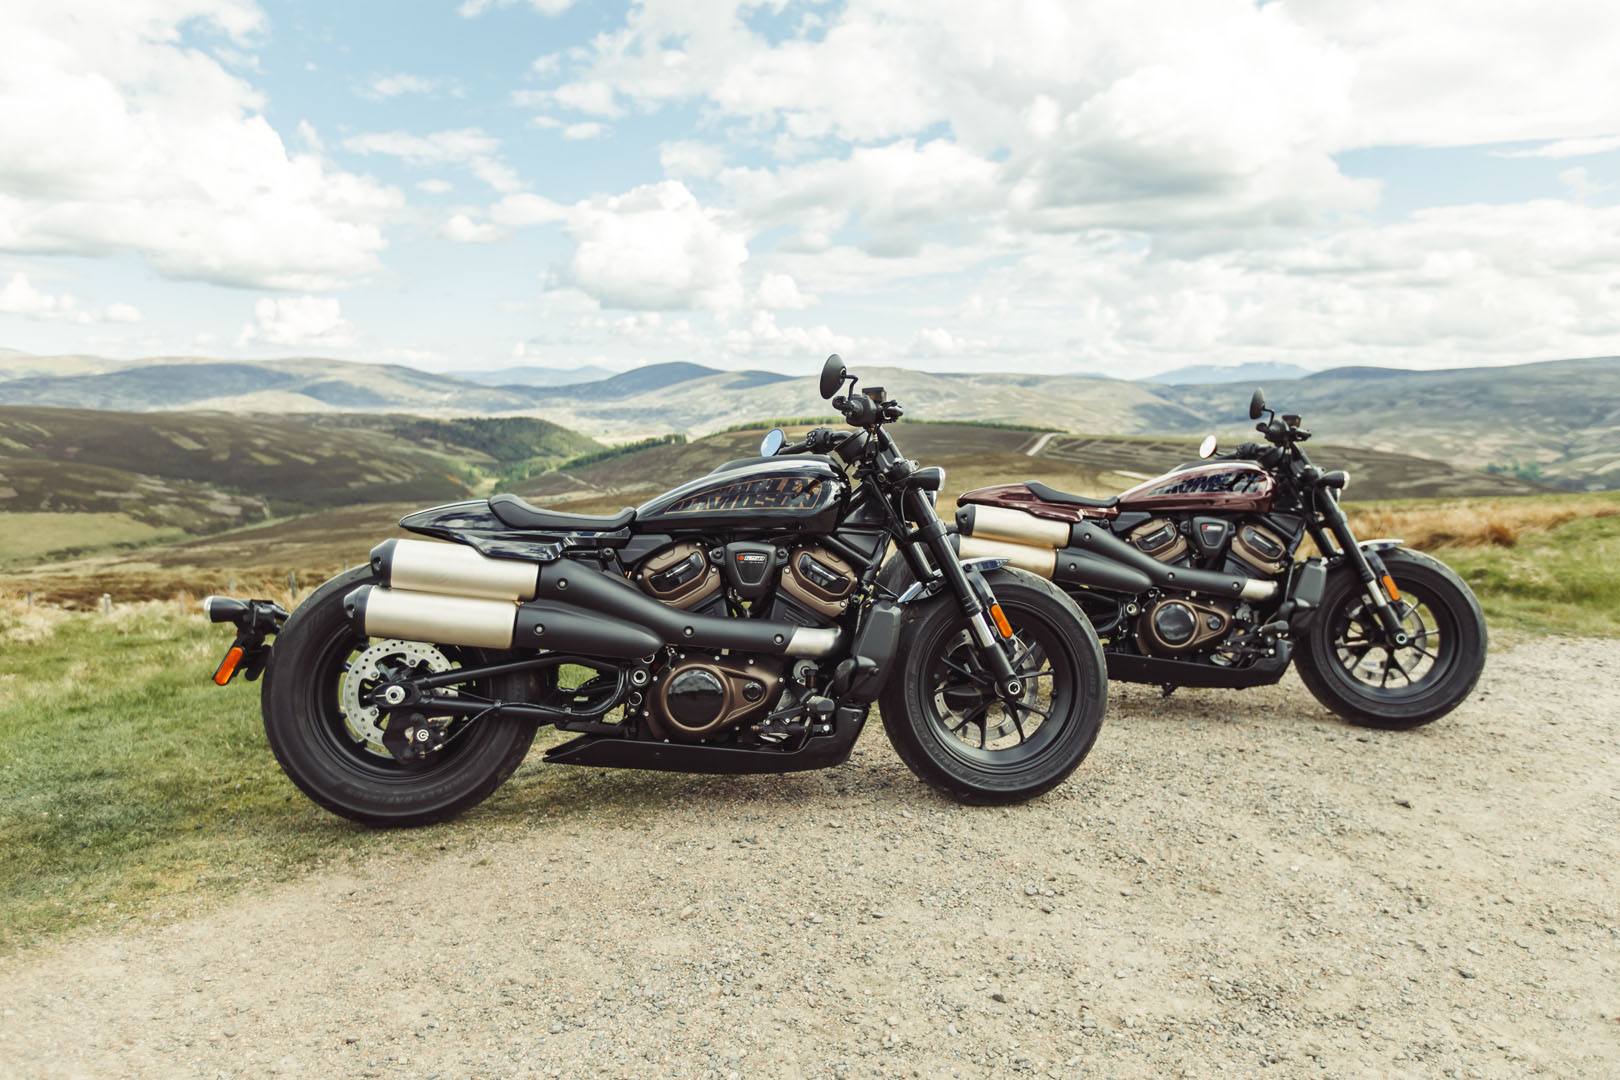 New 2021 Harley Davidson Sportster S Vivid Black Motorcycles In Syracuse Ny